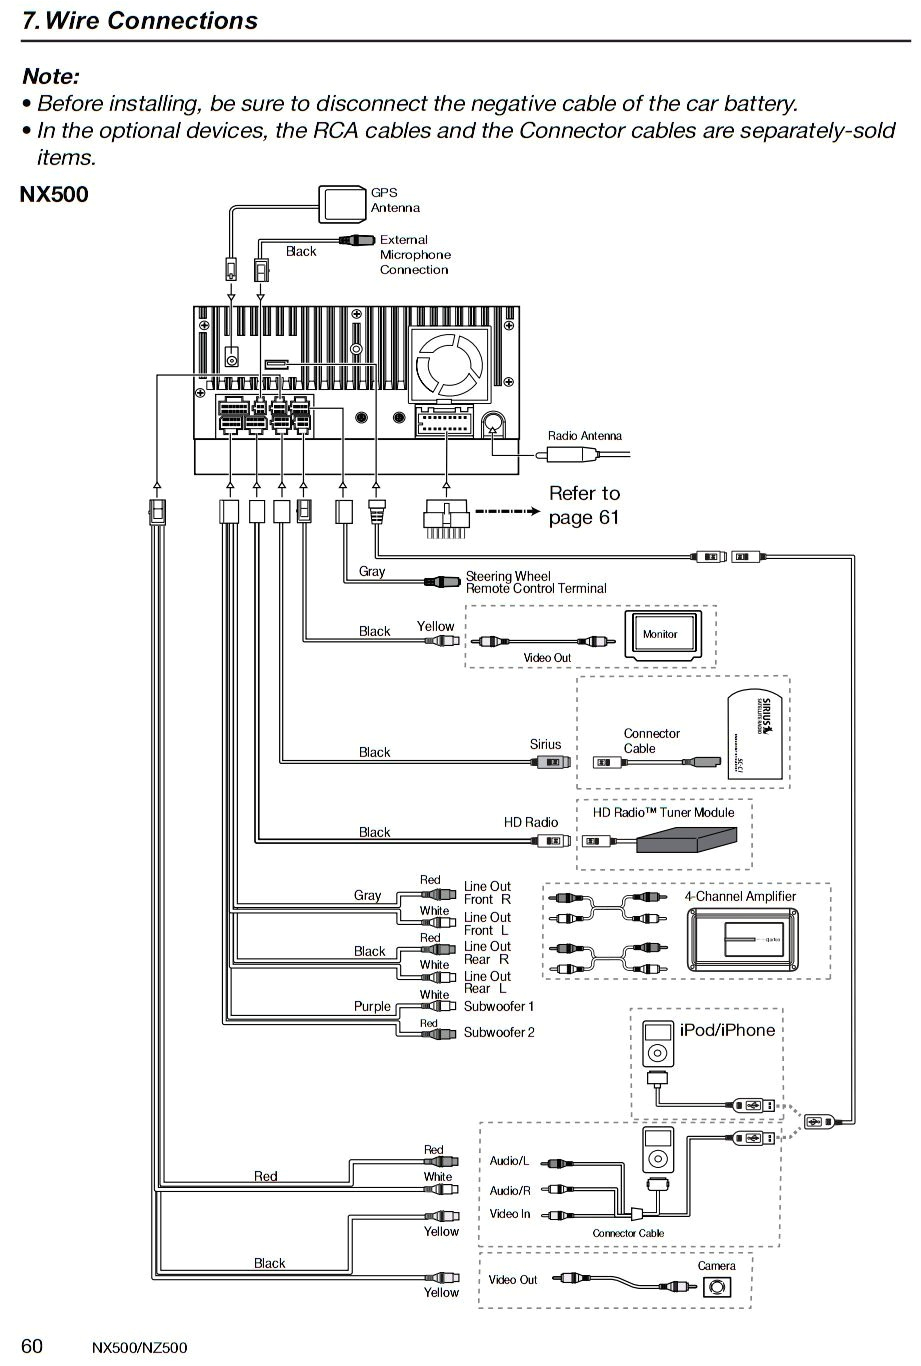 cmd5 wiring diagram wiring diagram listclarion cmd5 wiring diagram wiring diagram user clarion wire harness diagram